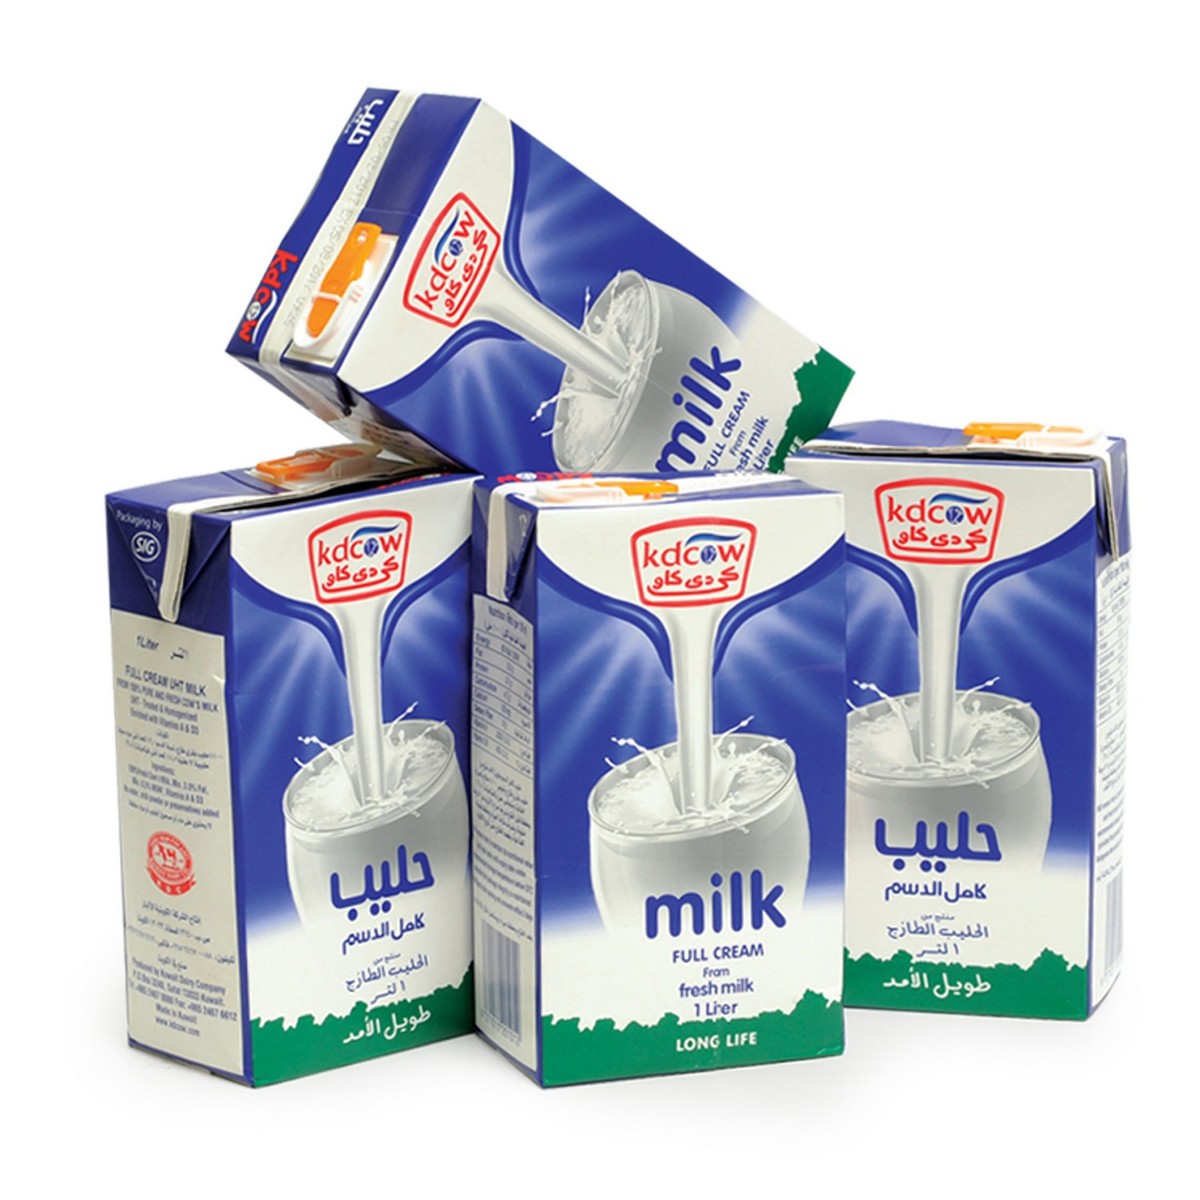 Kdcow UHT Milk Full Cream 4 x 1Litre